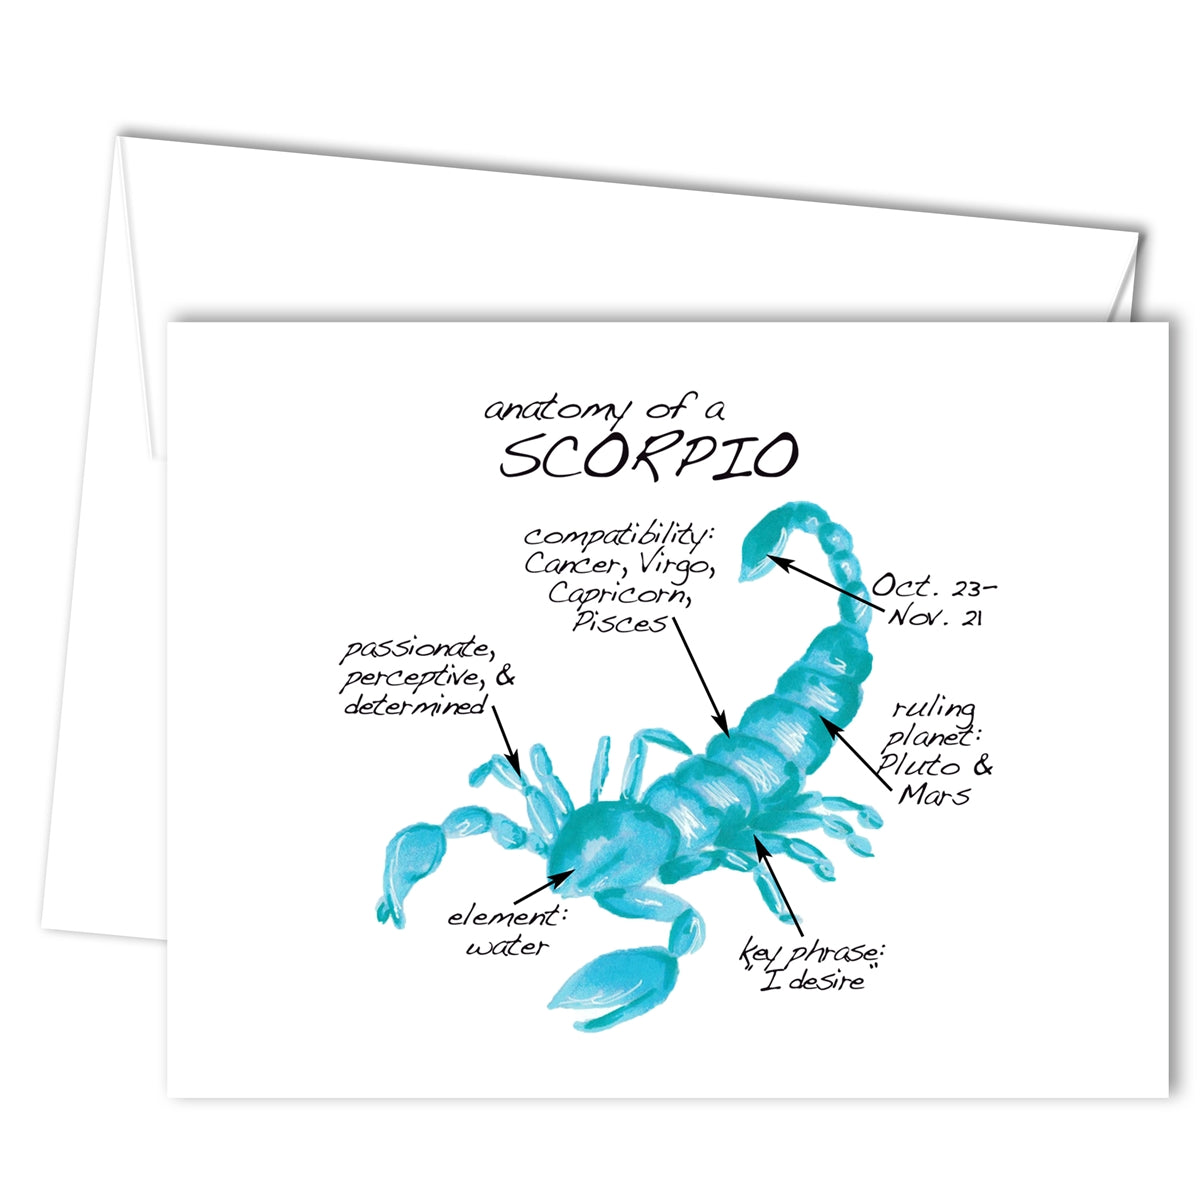 Scorpio Anatomy Greeting Card (blank inside)